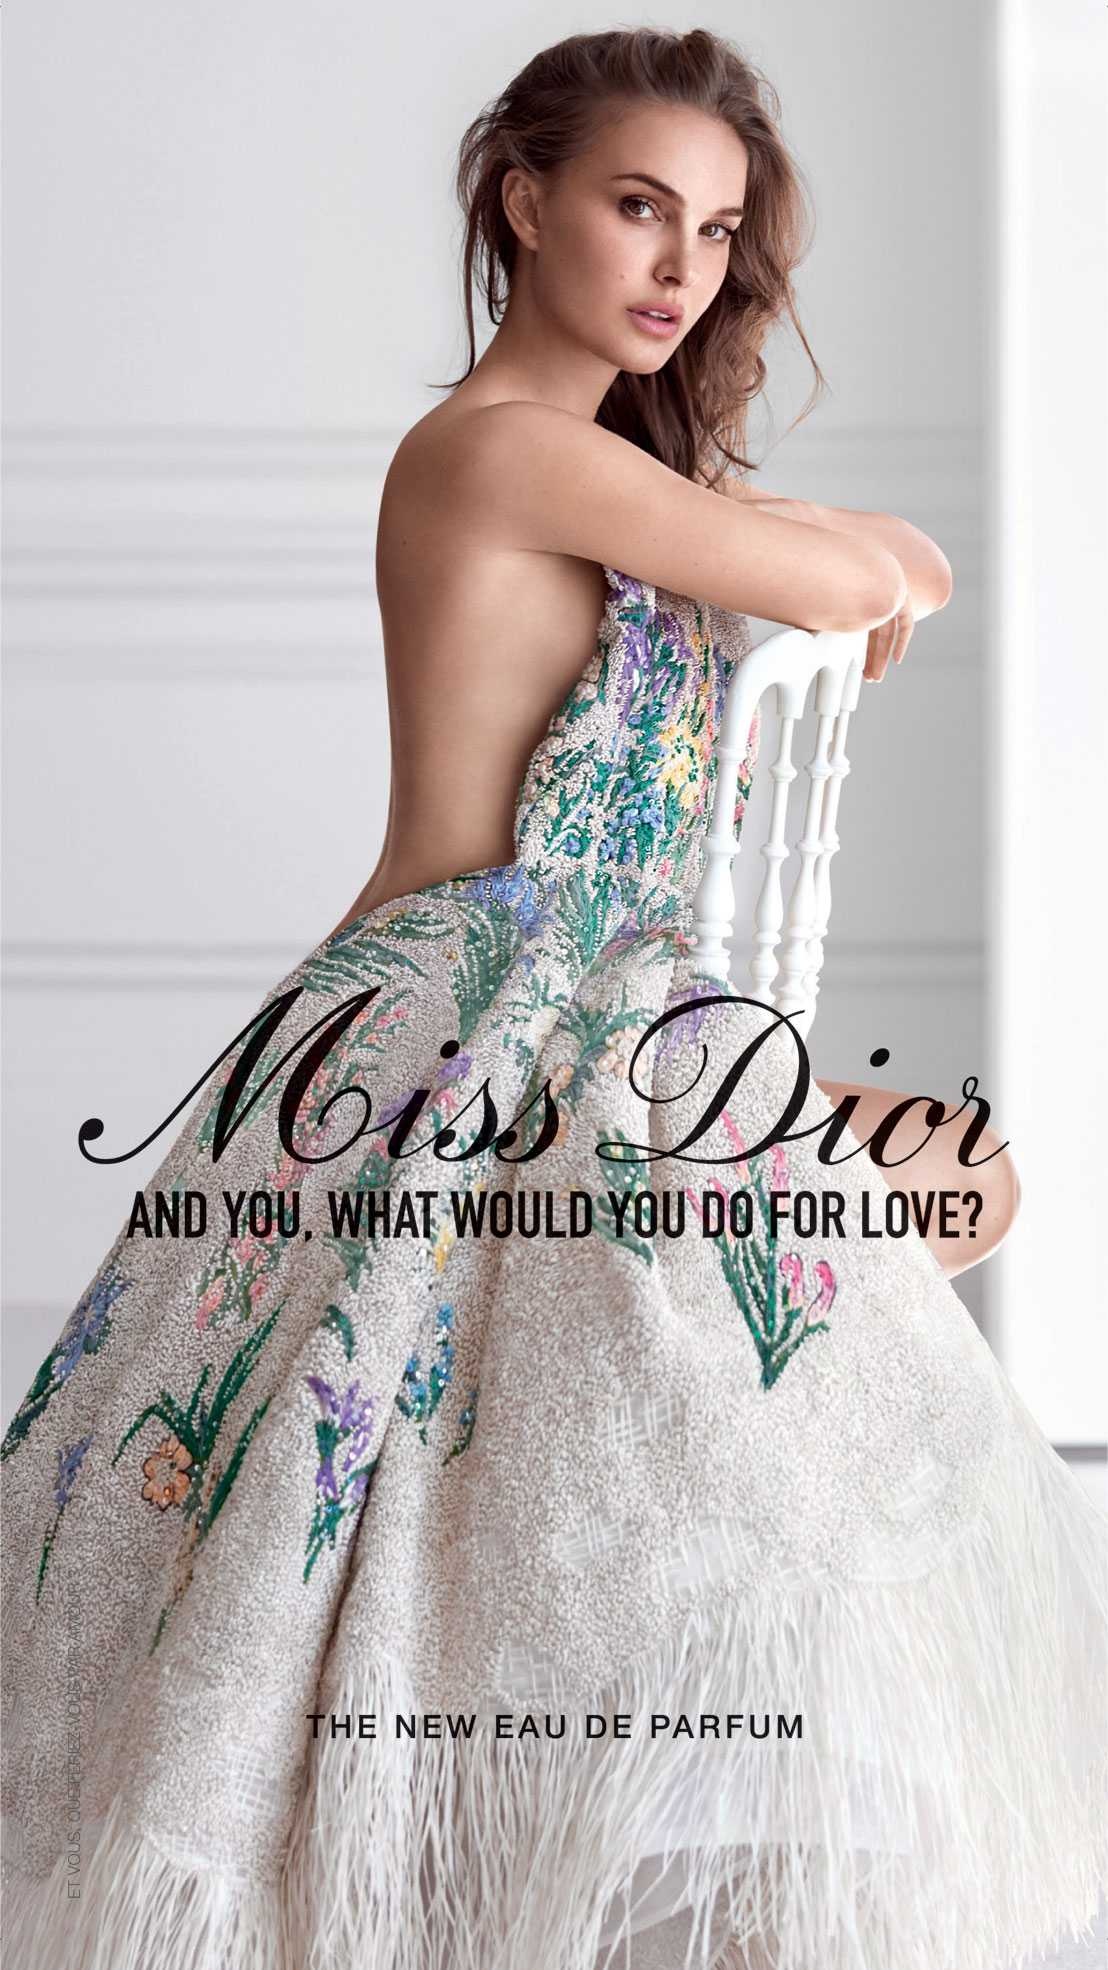 Dior: Natalie Portman, The face of the latest Miss Dior eau de parfum. 1110x1970 HD Wallpaper.